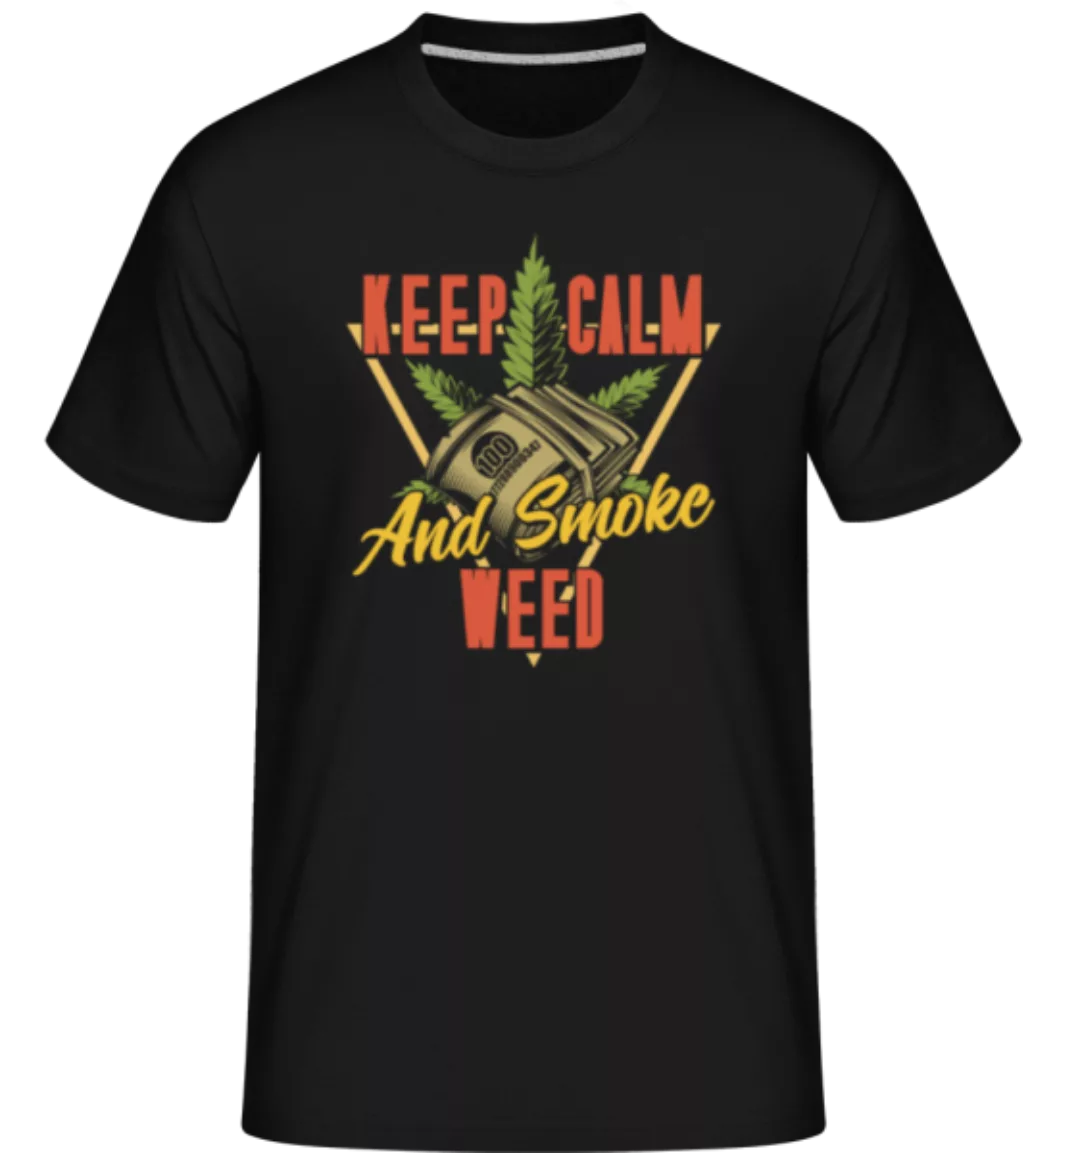 Keep Calm And Smoke Weed · Shirtinator Männer T-Shirt günstig online kaufen